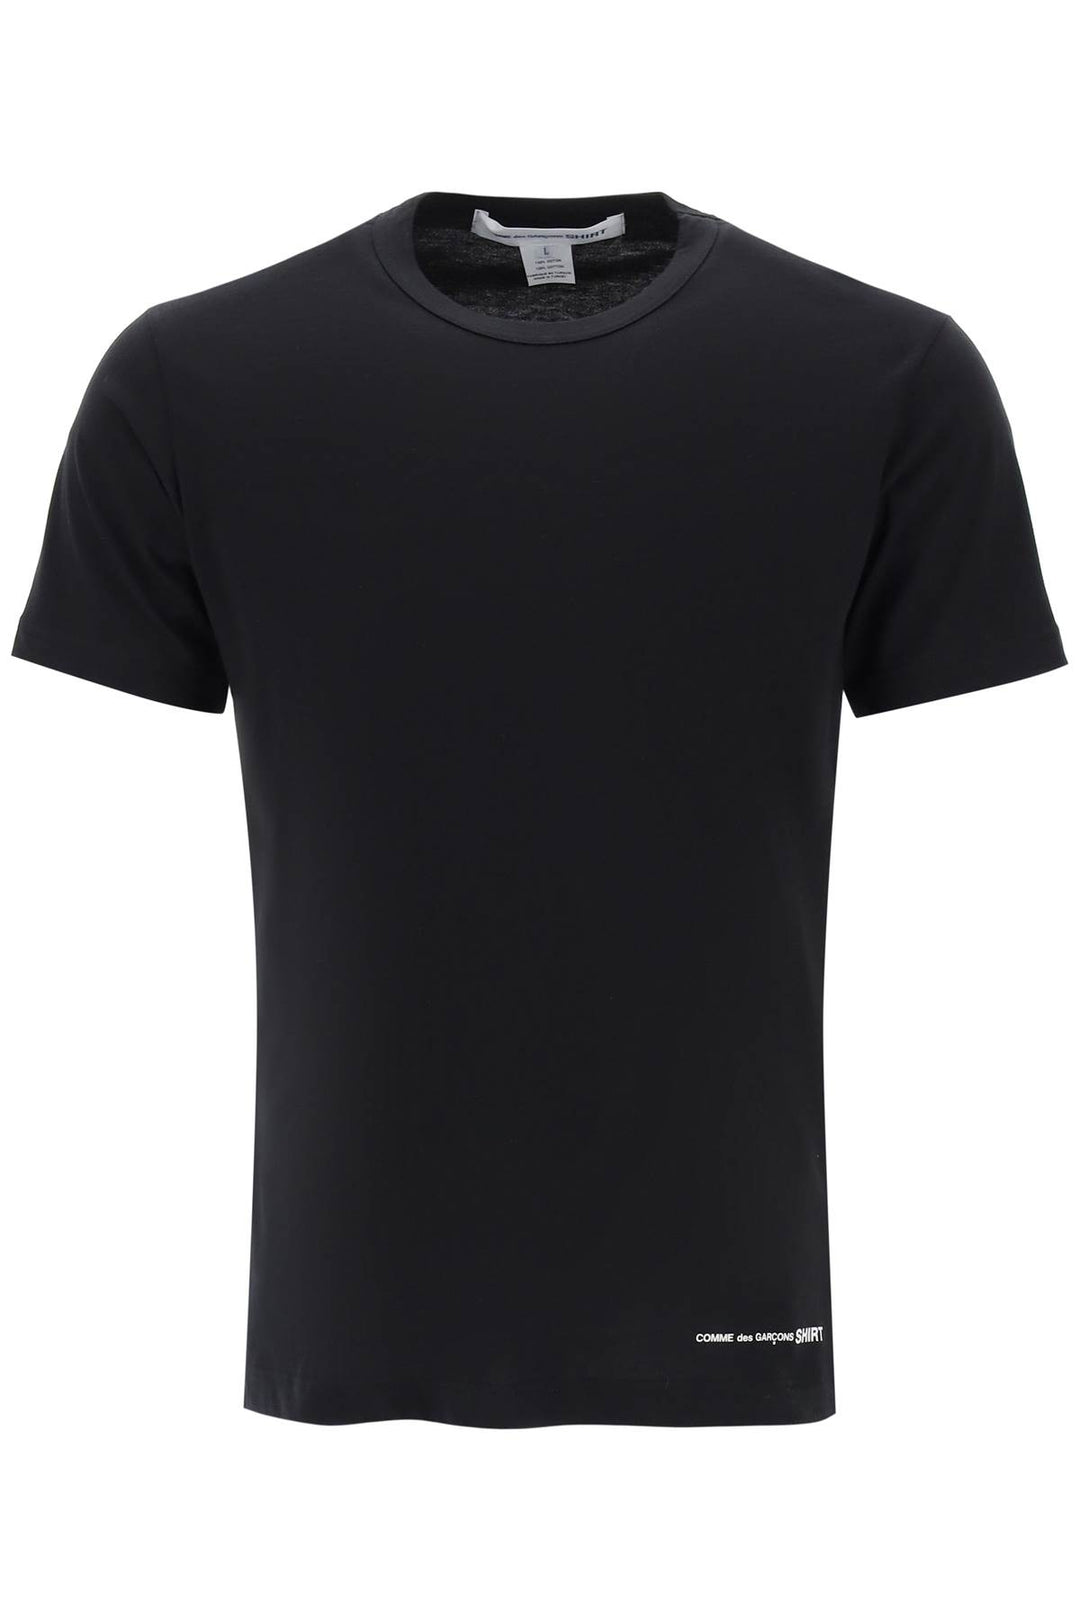 Comme Des Garcons Shirt Logo Print T Shirt   Nero